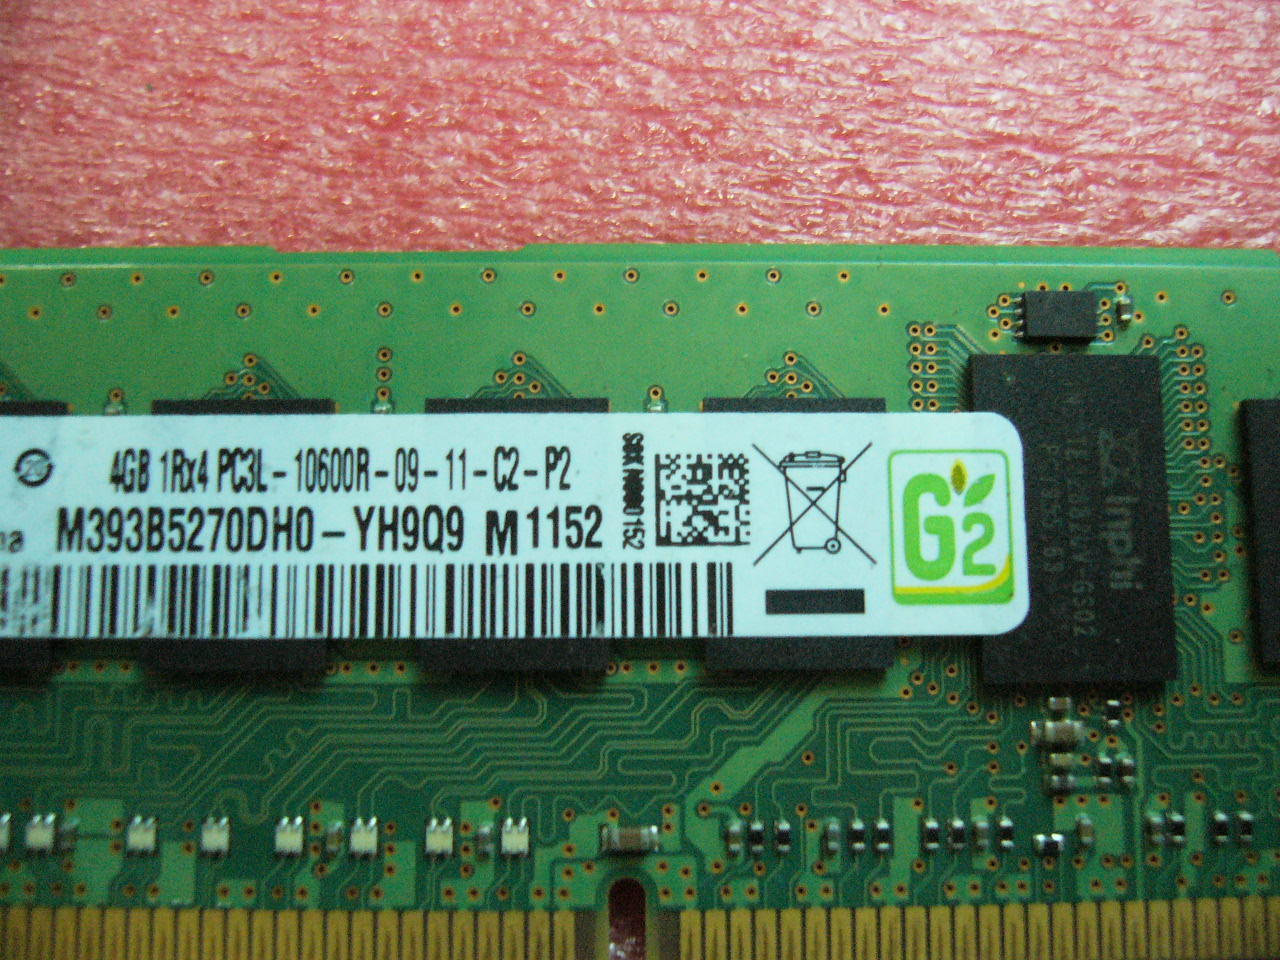 QTY 1x 4GB DDR3 1Rx4 PC3L-10600R ECC Registered Server memory HP 605312-071 - Click Image to Close